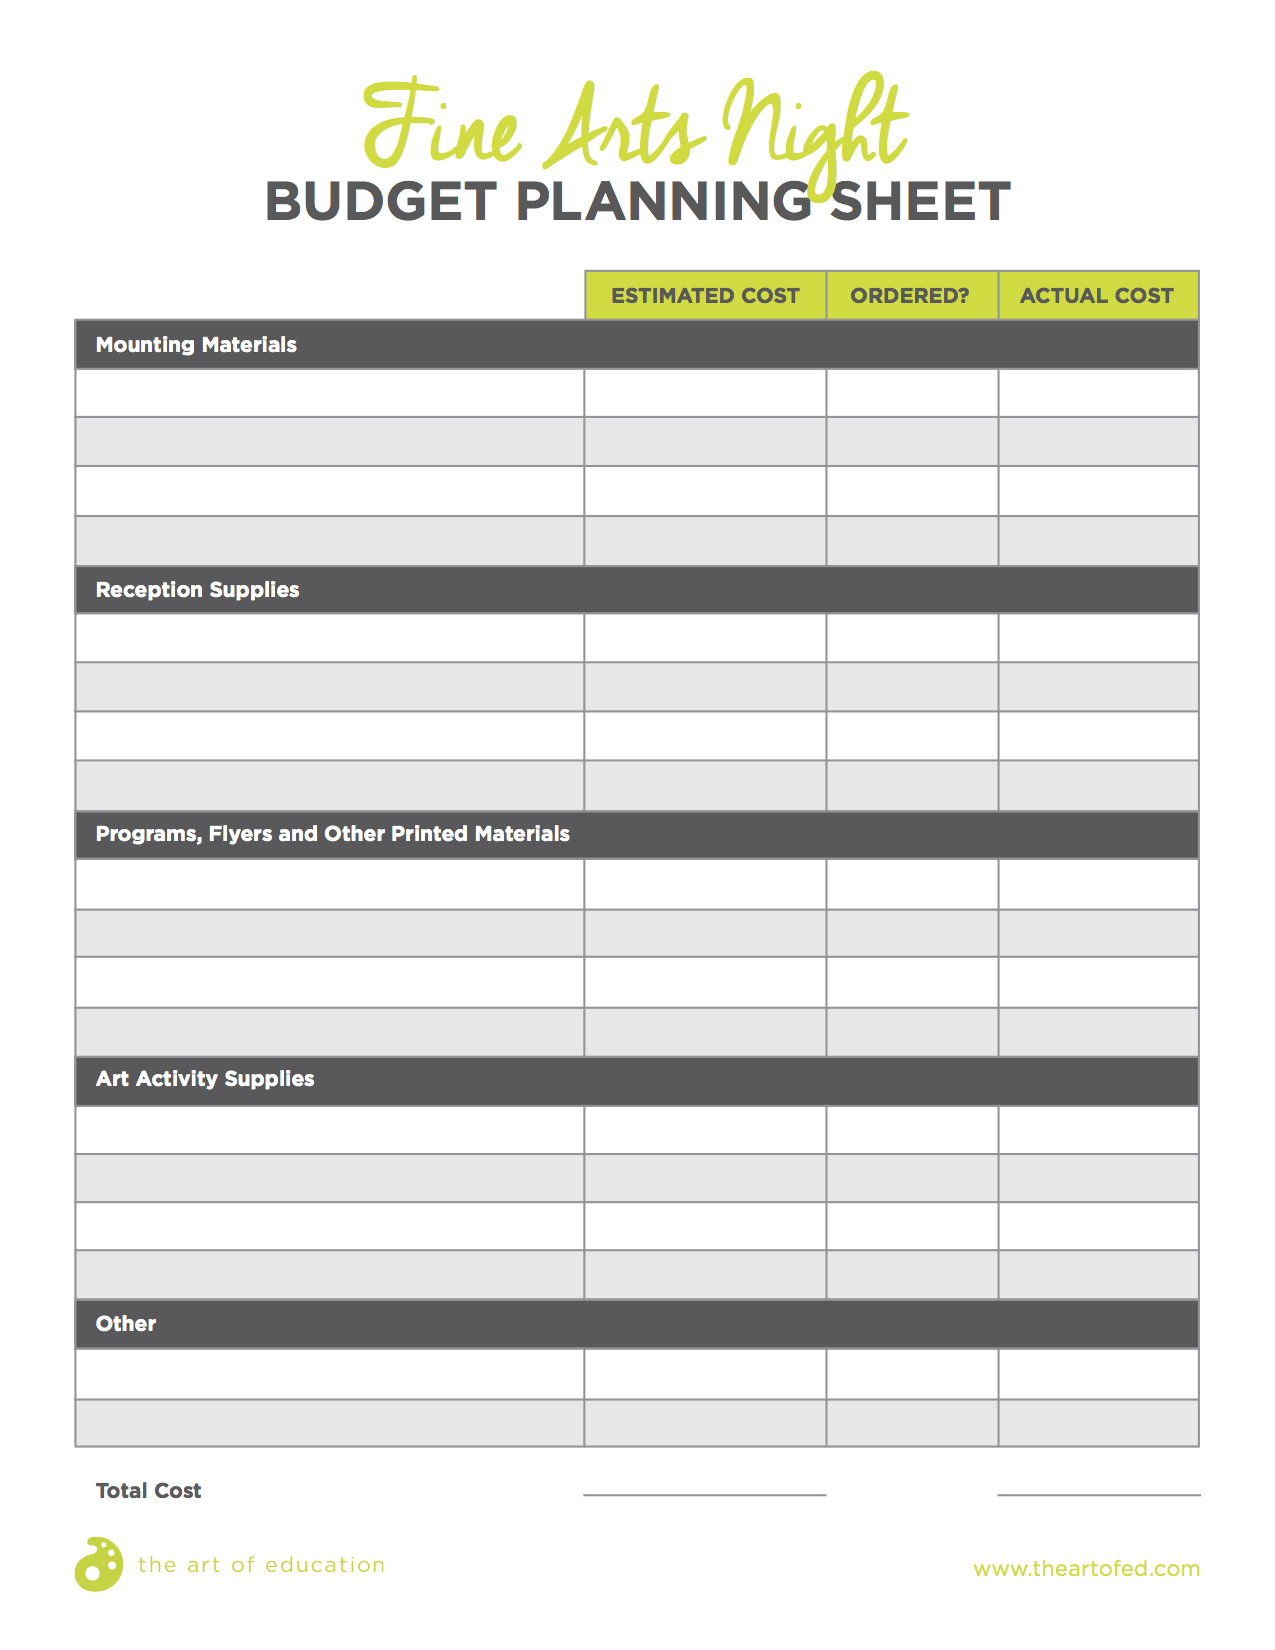 Fine Arts Night Budget Planning Sheet